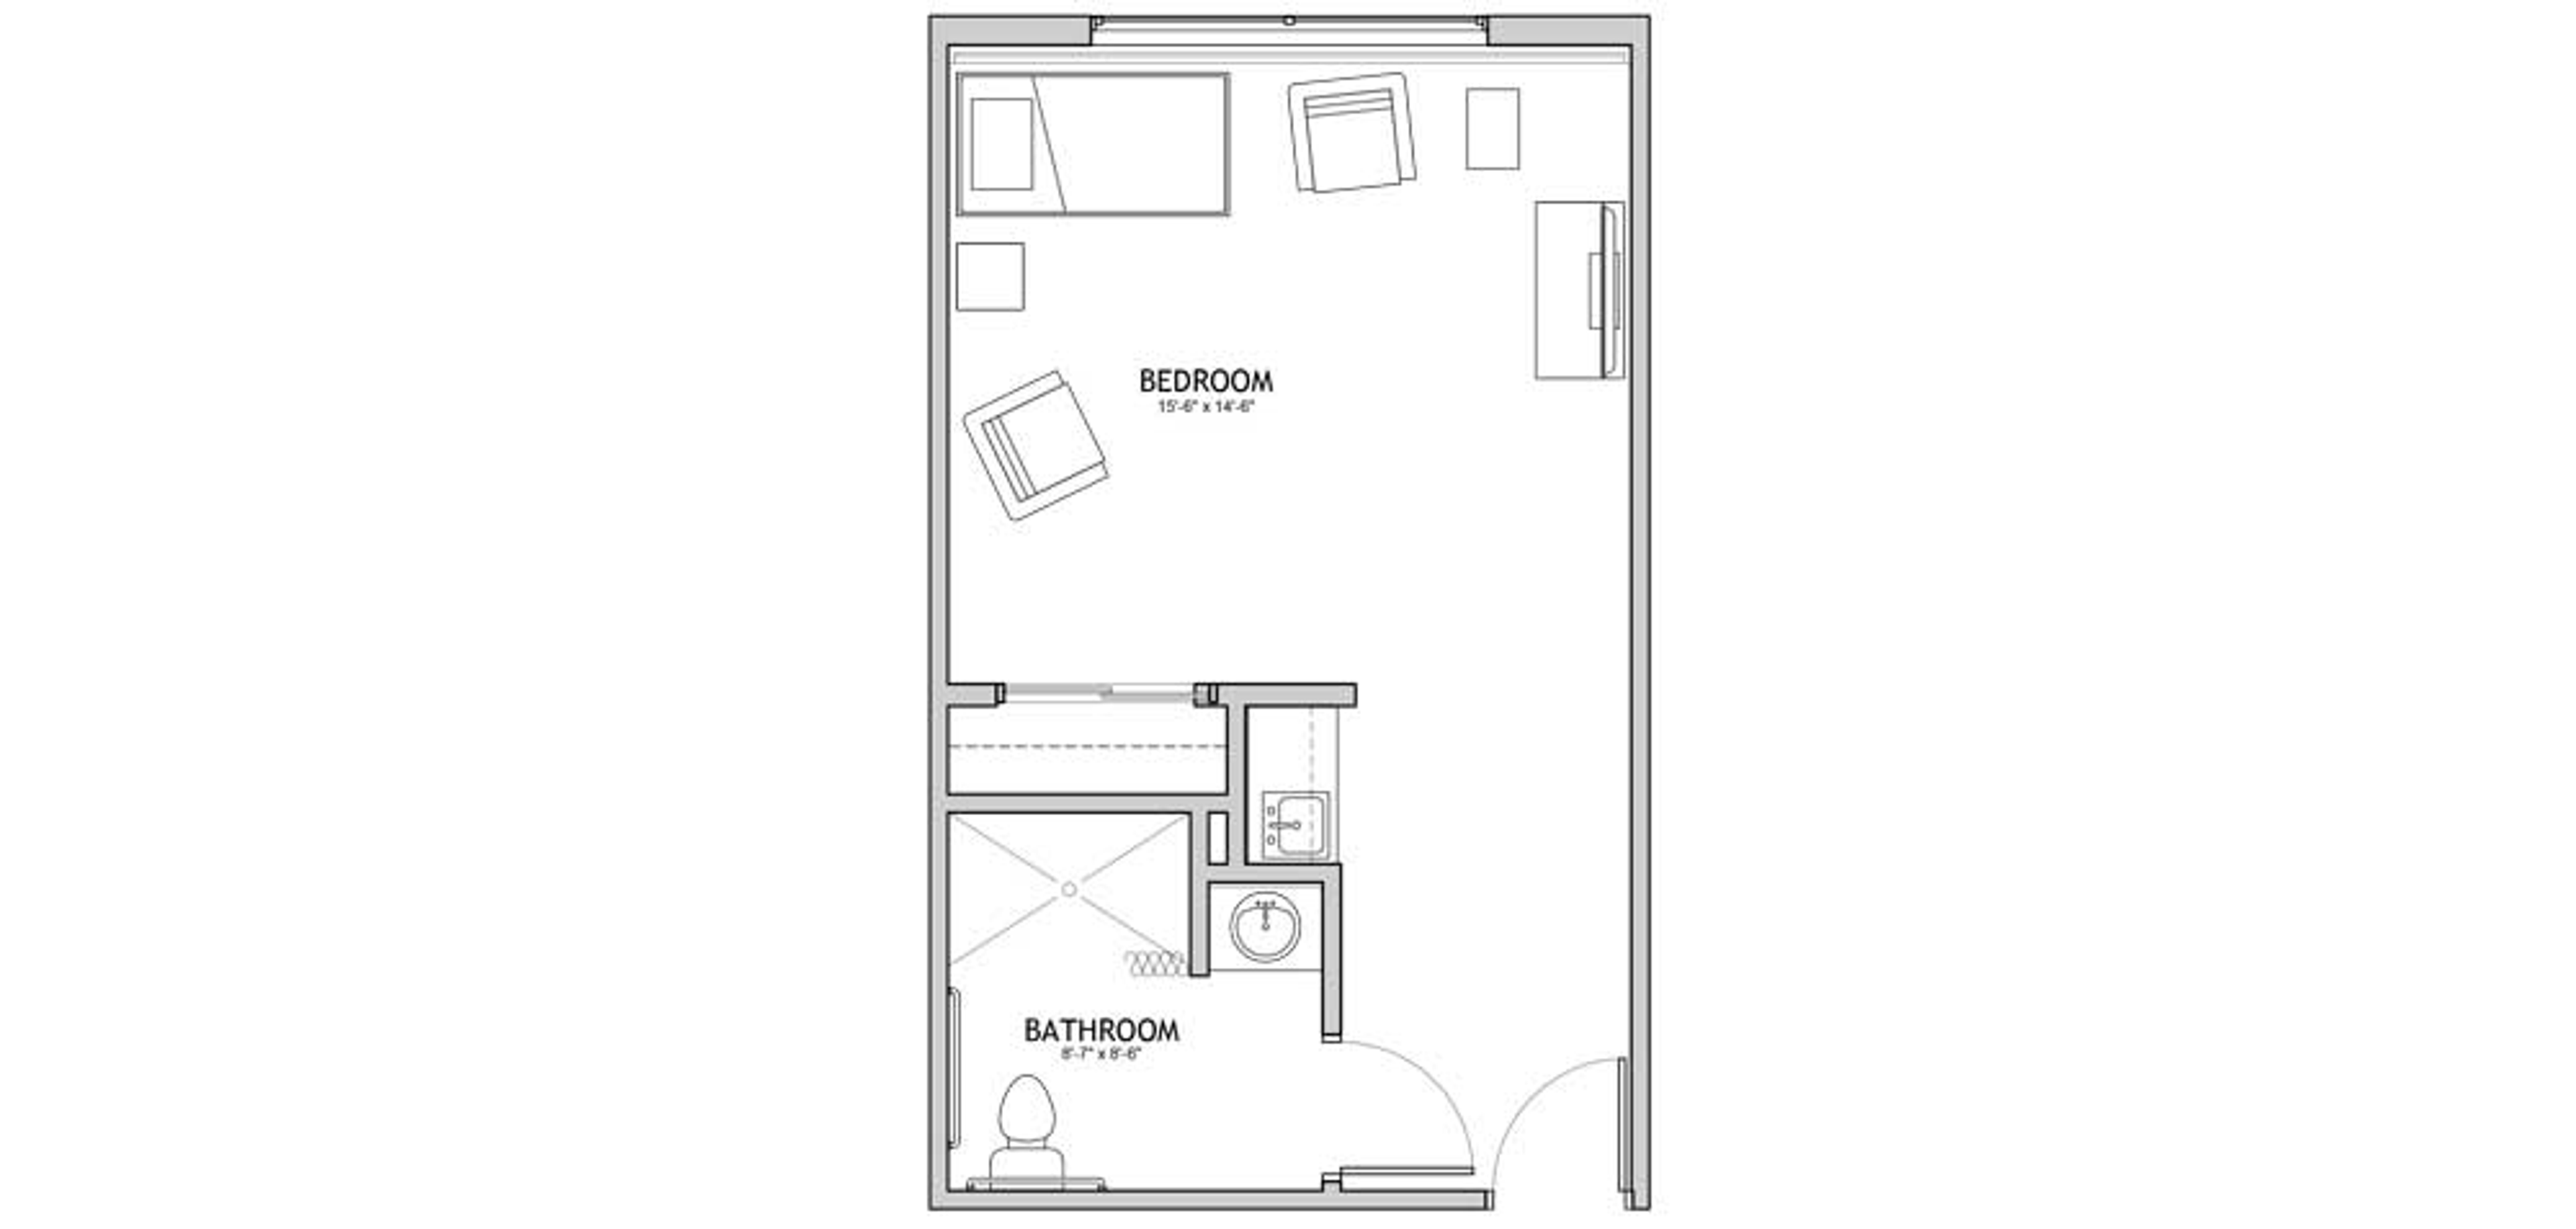 Floorplan - The Auberge at Oak Village - 1 bed, 1 bath, 432 sq. ft. Memory Care